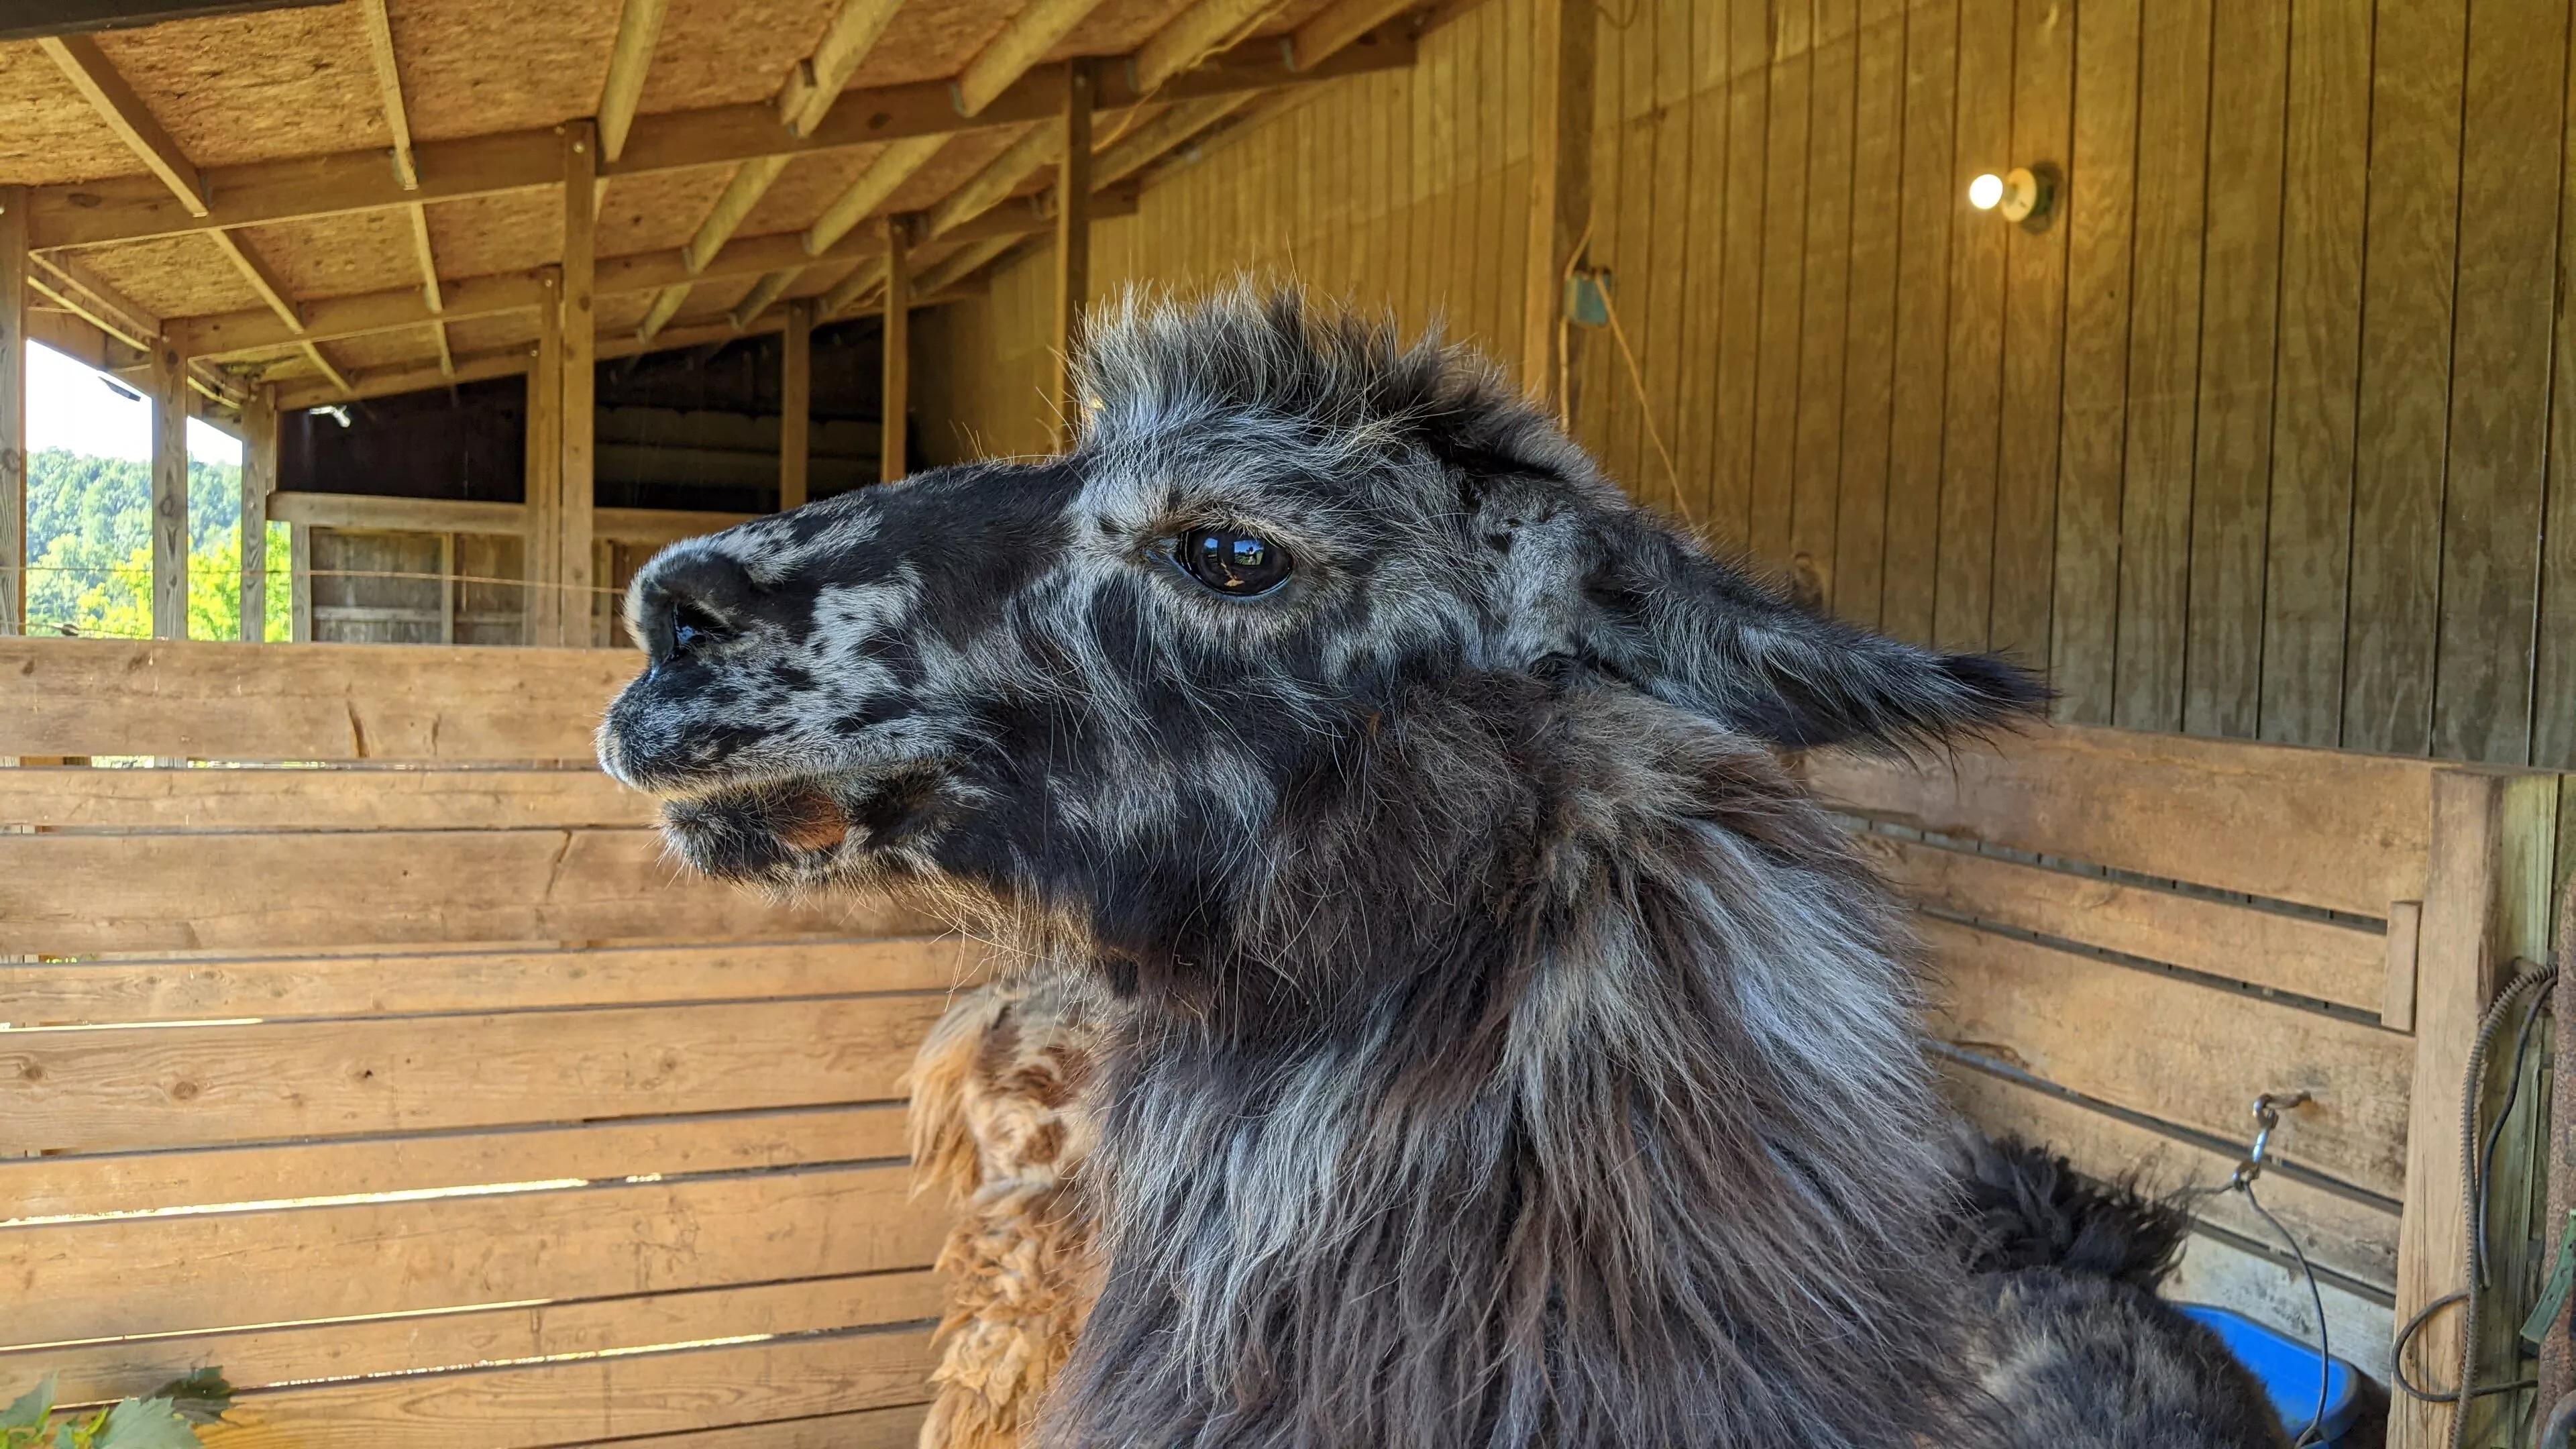 An image of a llama named Kingsley inside a barn